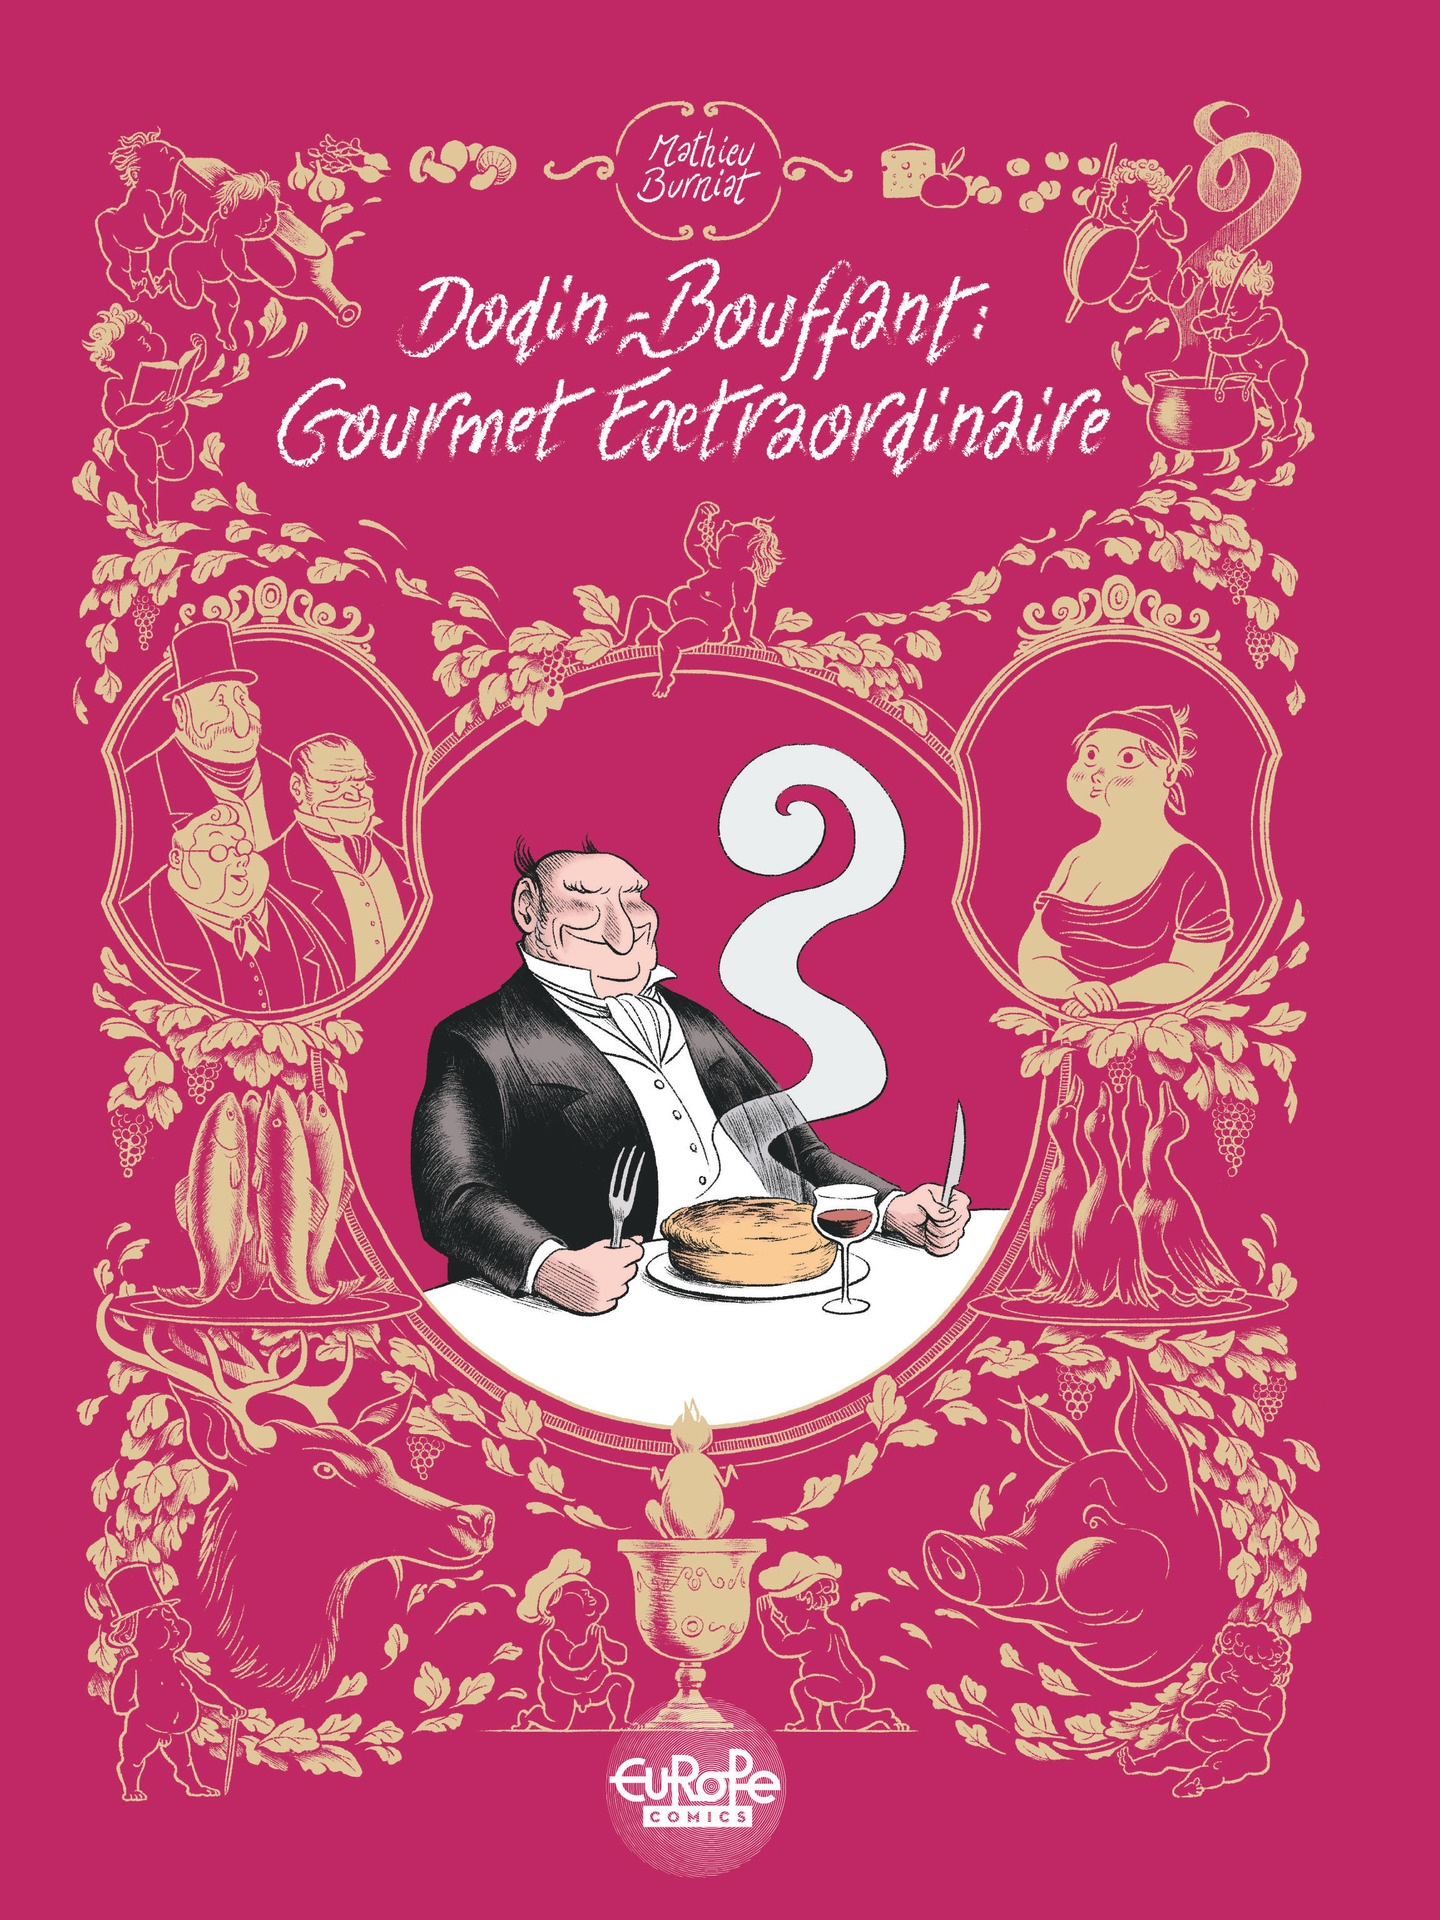 Read online Dodin-Bouffant: Gourmet Extraordinaire comic -  Issue # TPB - 1